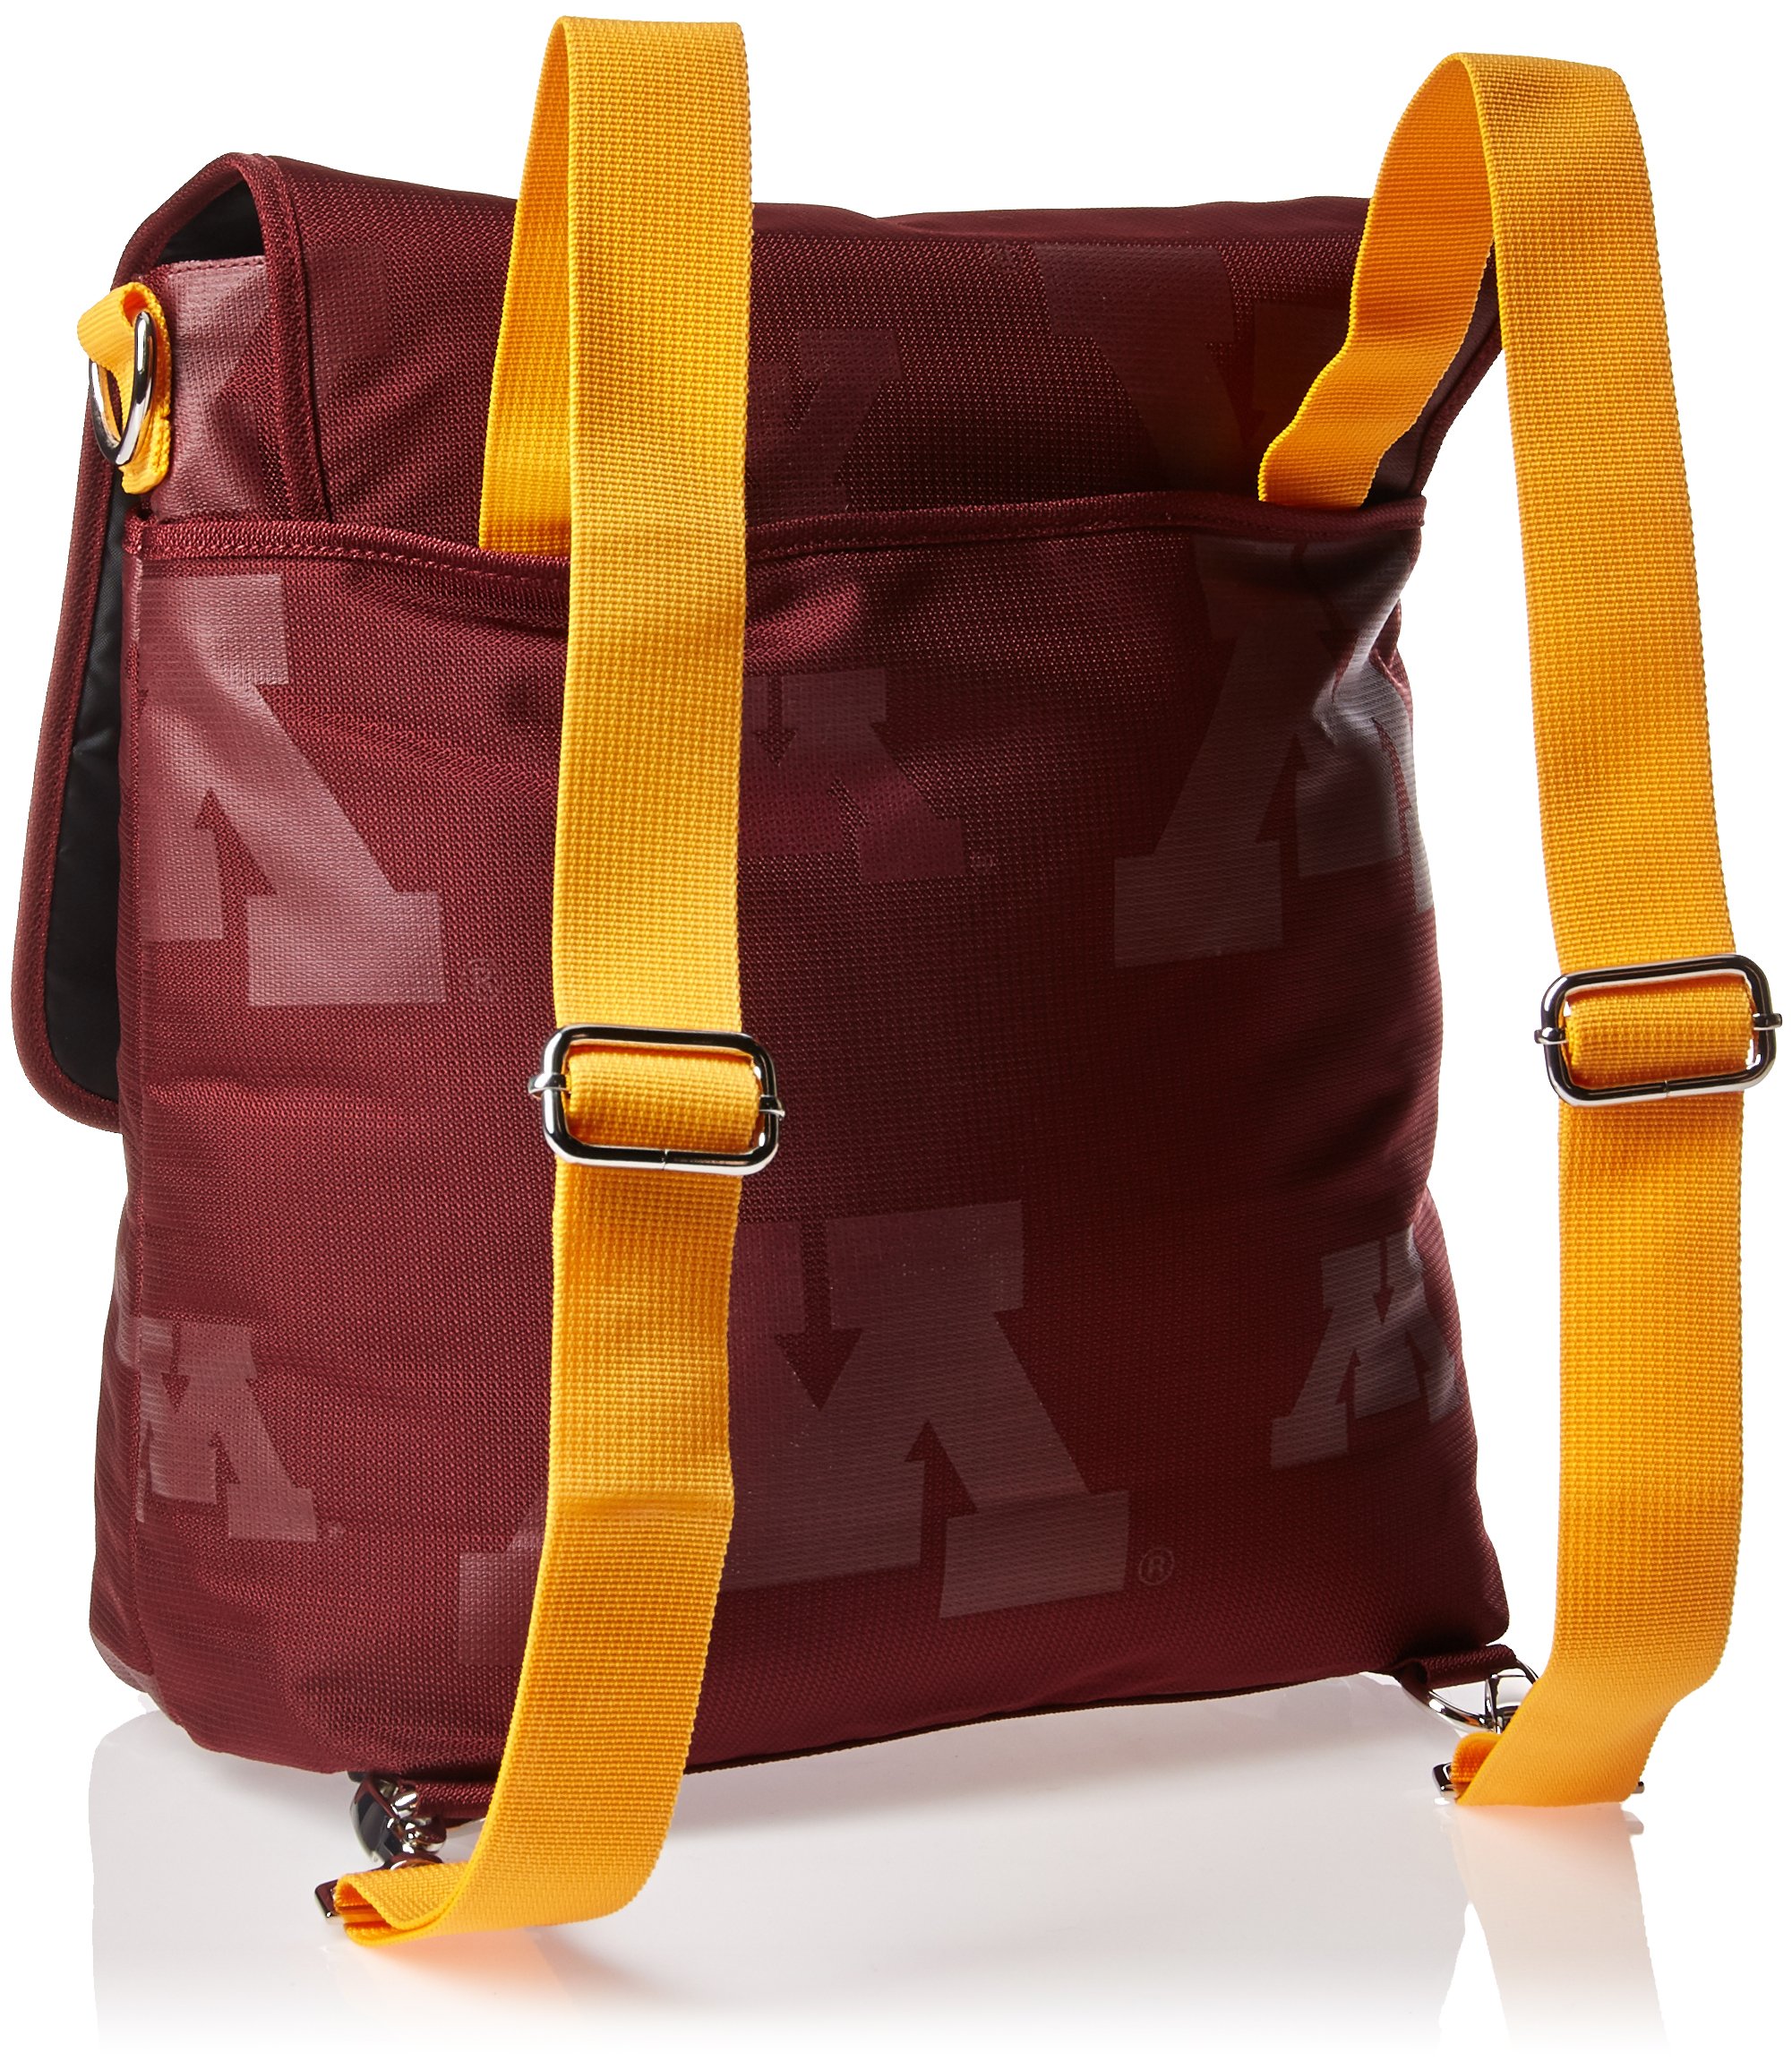 Minnesota Golden Gophers NCAA LilFan Diaper Messenger Bag - image 2 of 5